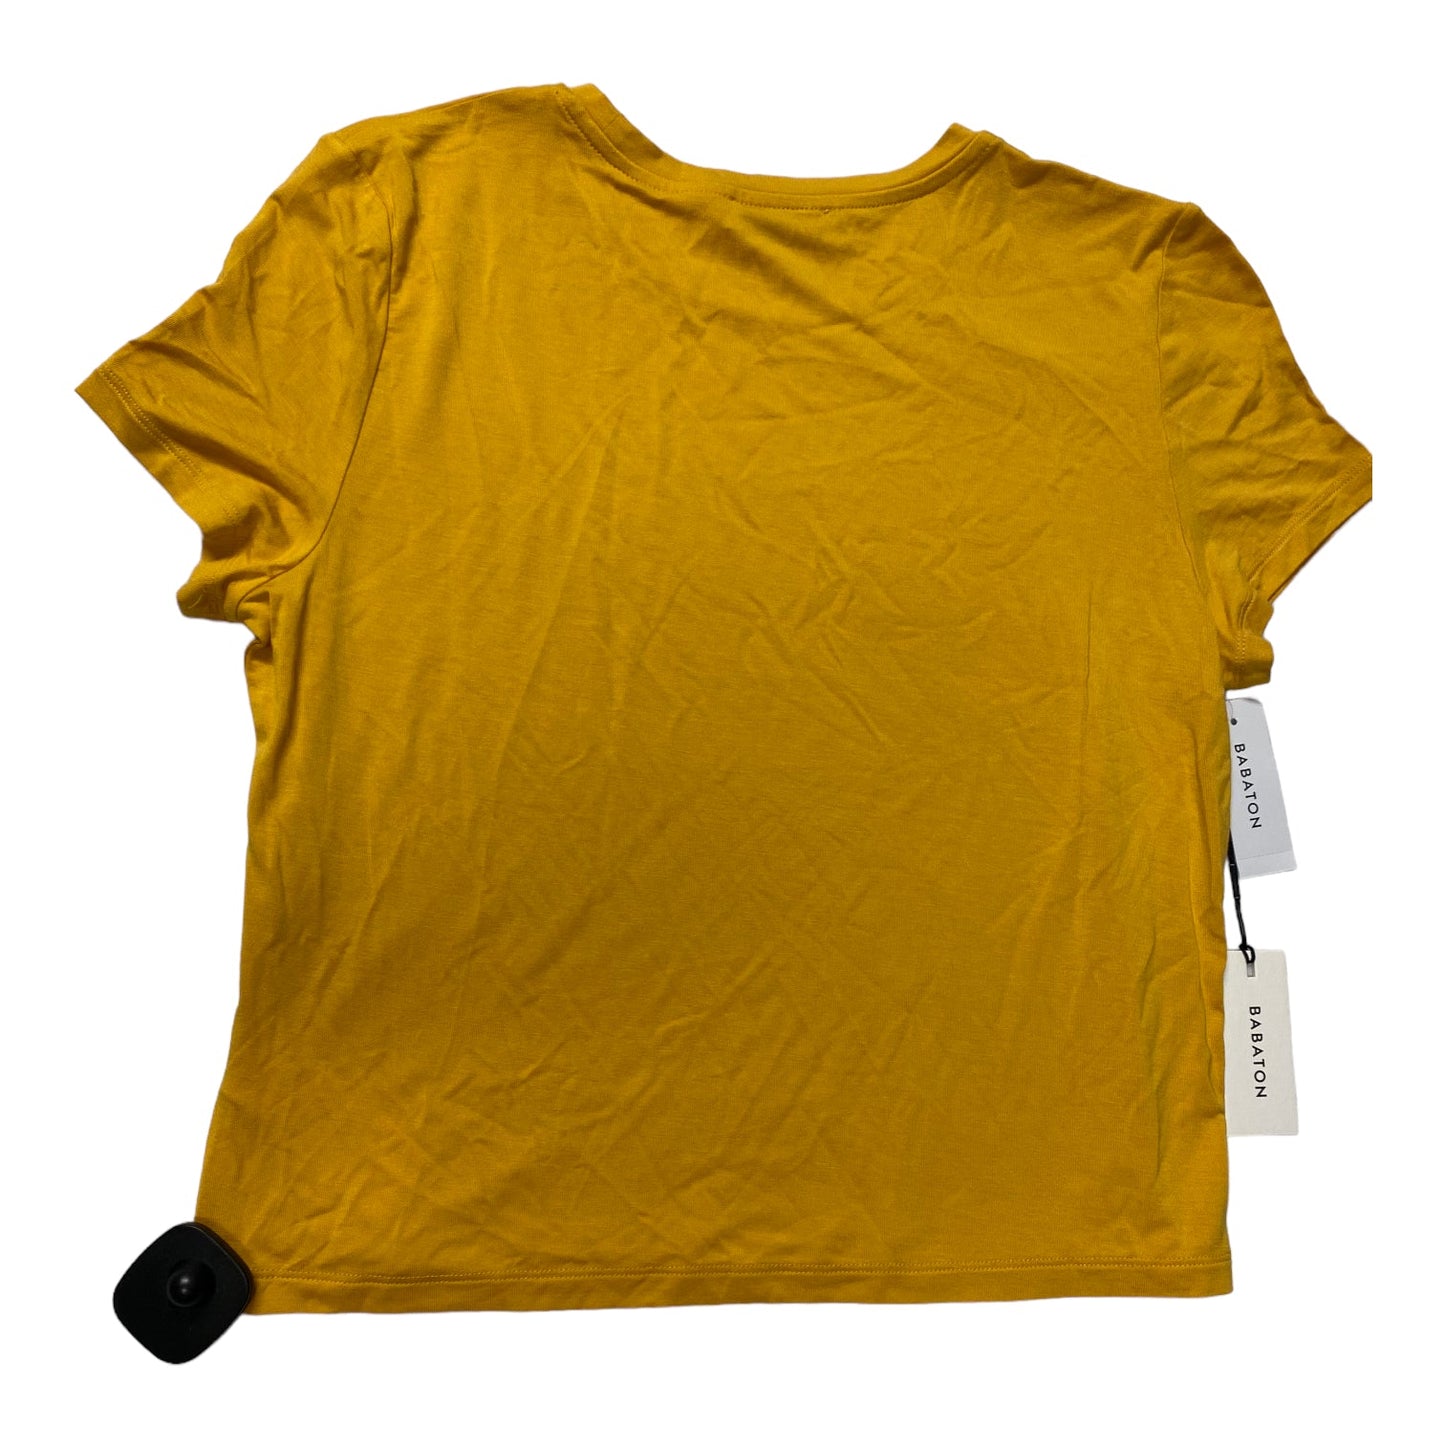 Yellow Top Short Sleeve Basic Babaton, Size M